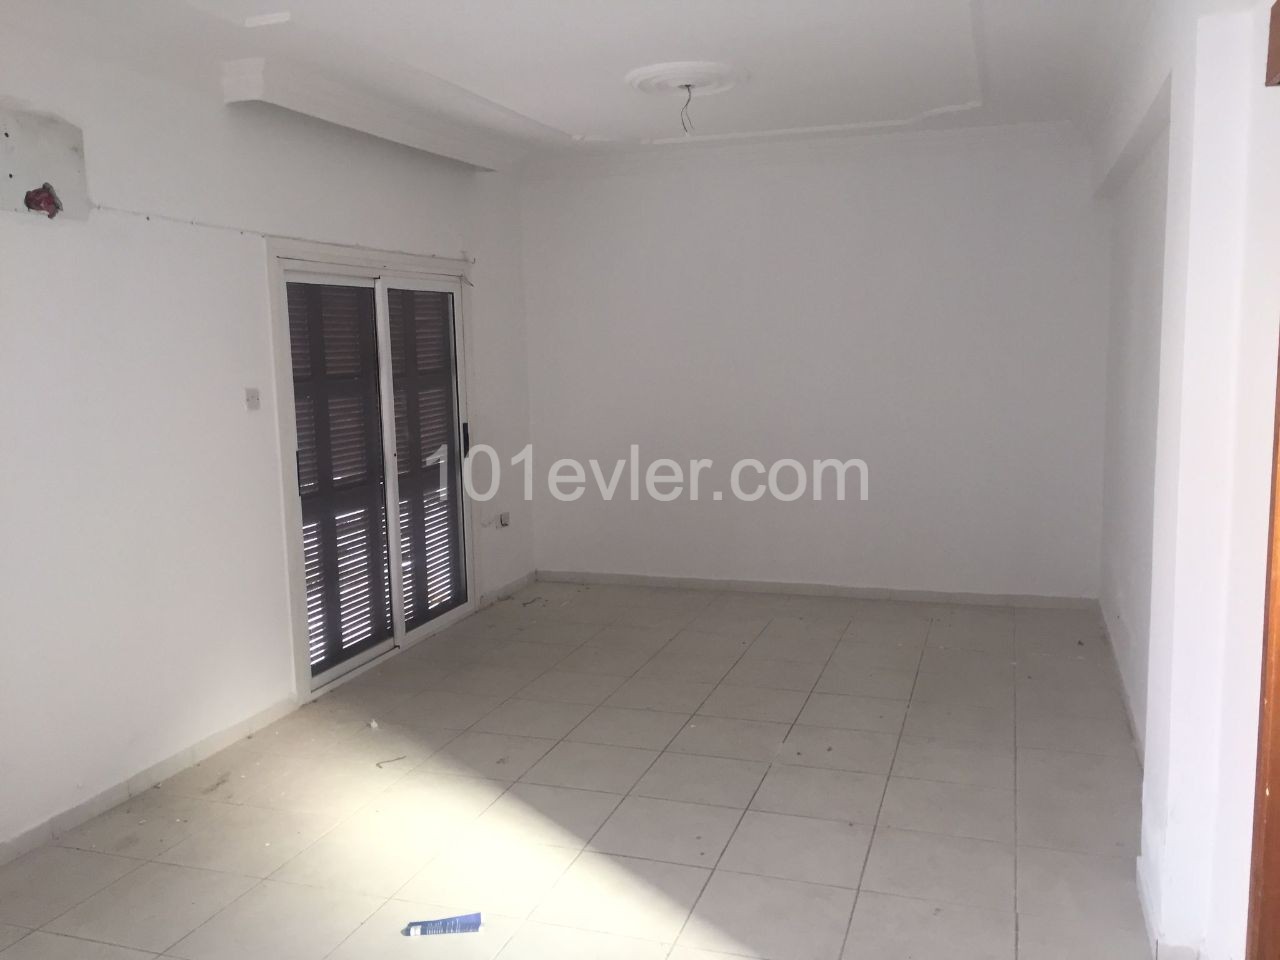 Twin Duplex Social Housing 160 m2 in a Corner Plot for Sale in Nicosia Taşkınköy Area 3+1 ** 